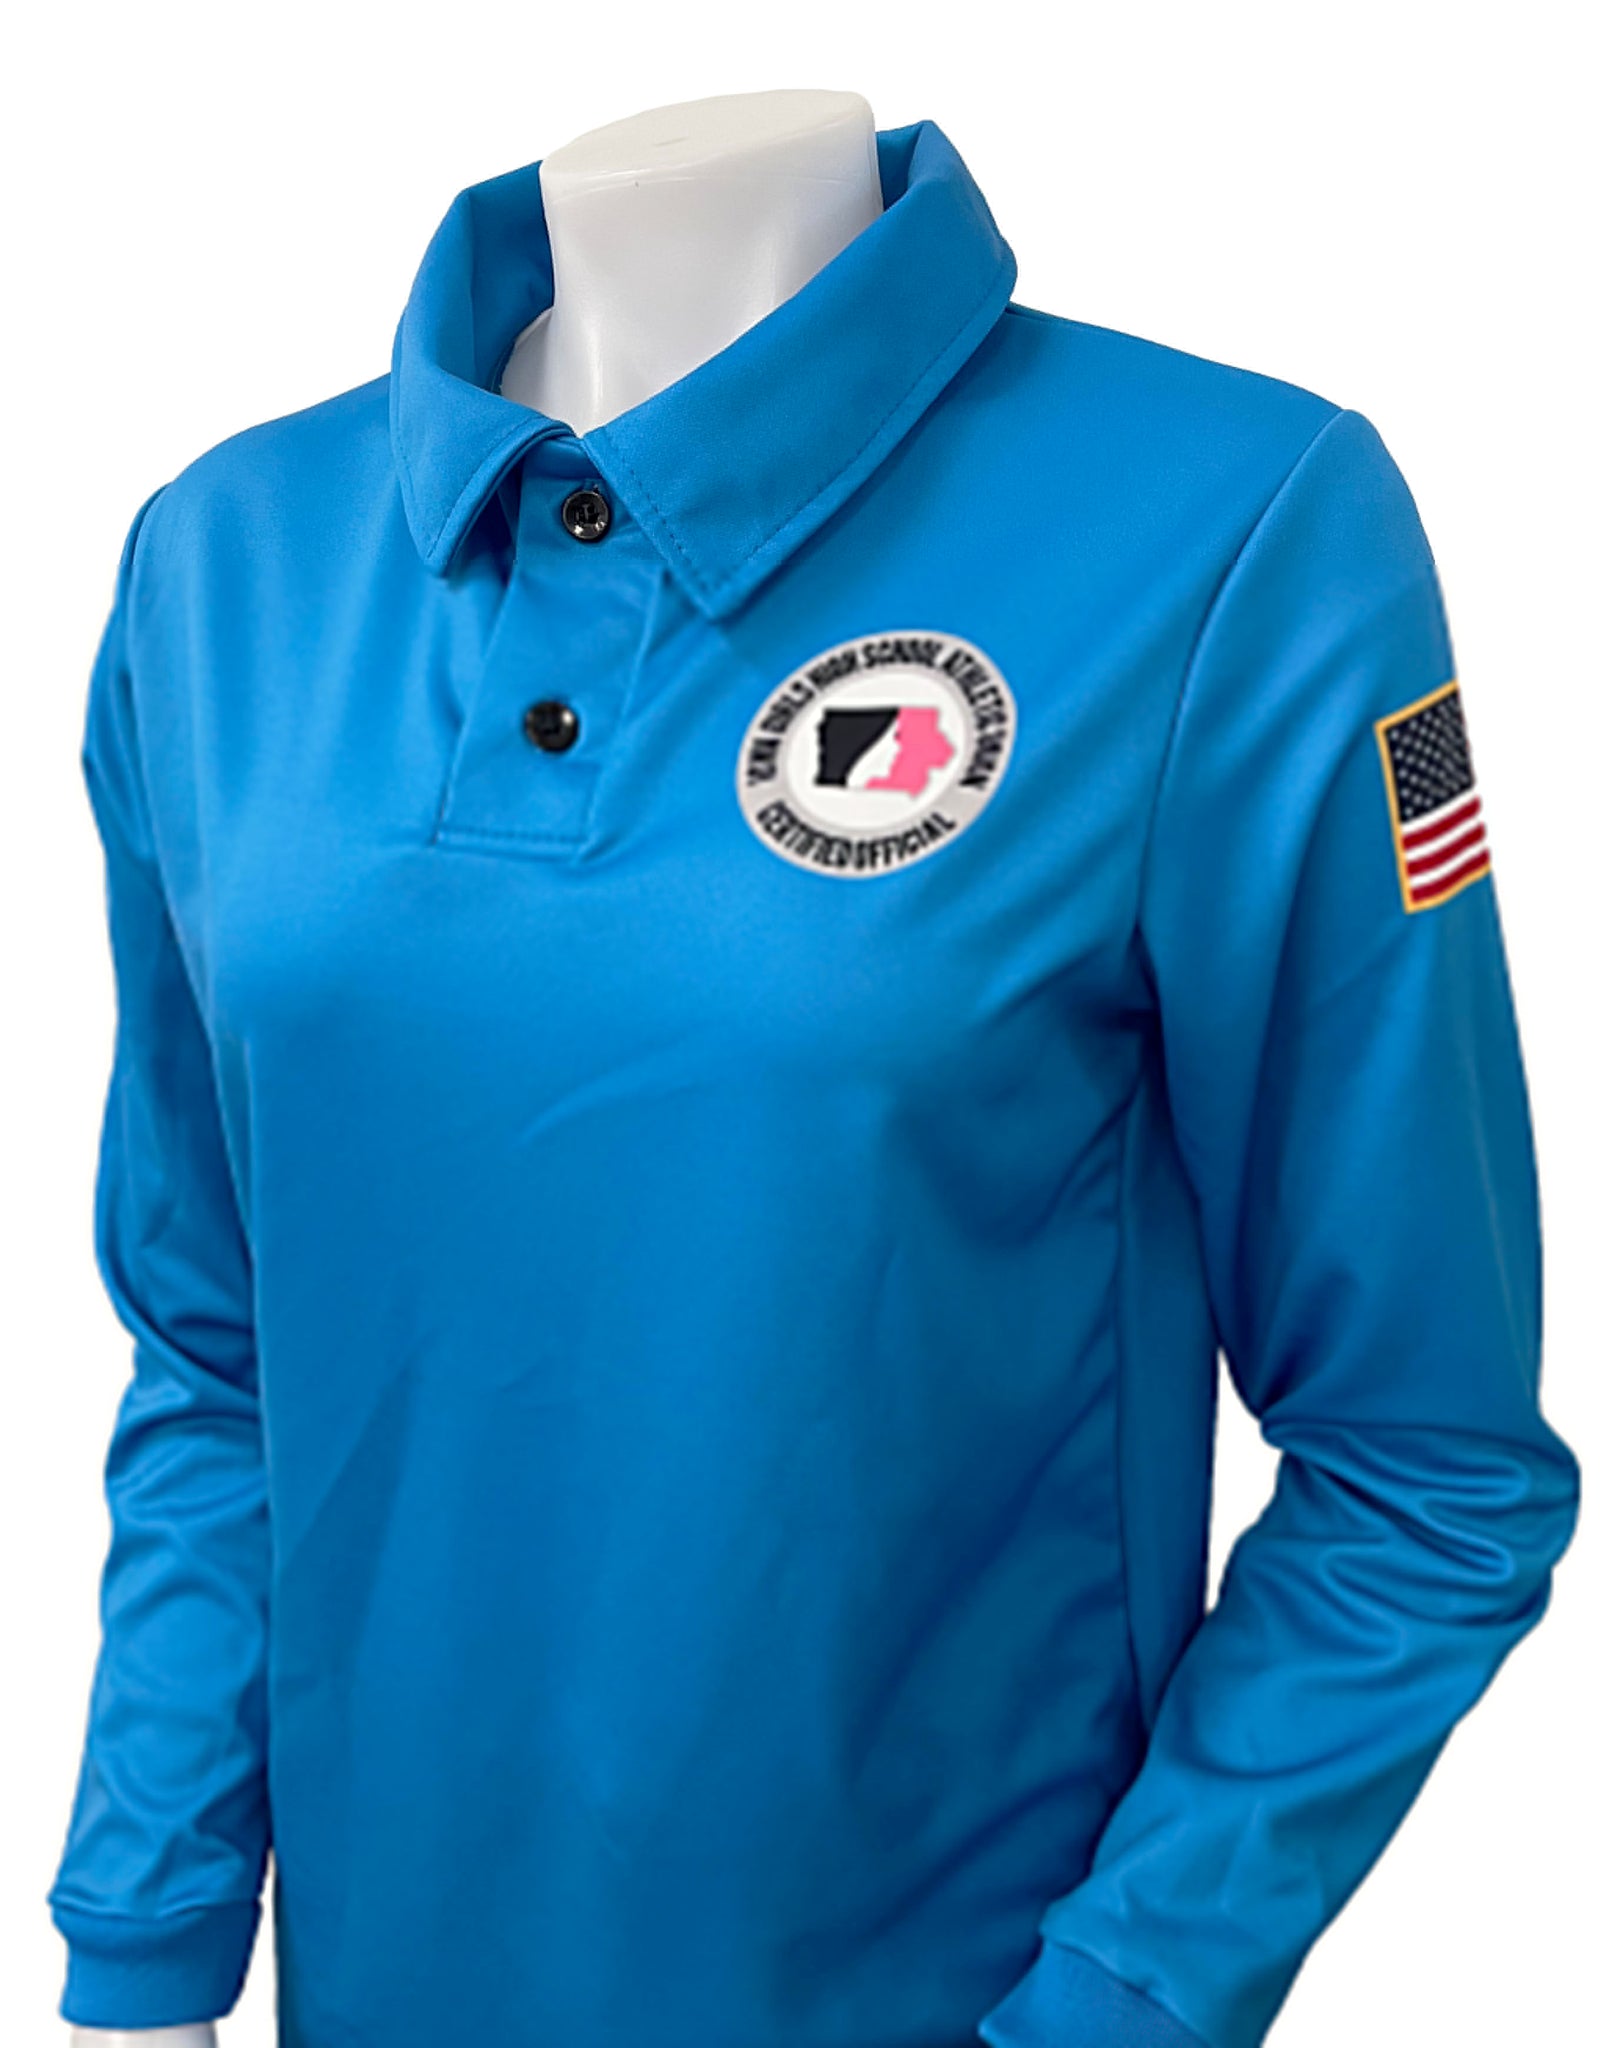 USA403IGU-BB - Smitty "Made in USA" - IGHSAU Women's Long Sleeve "BRIGHT BLUE" Volleyball Shirt